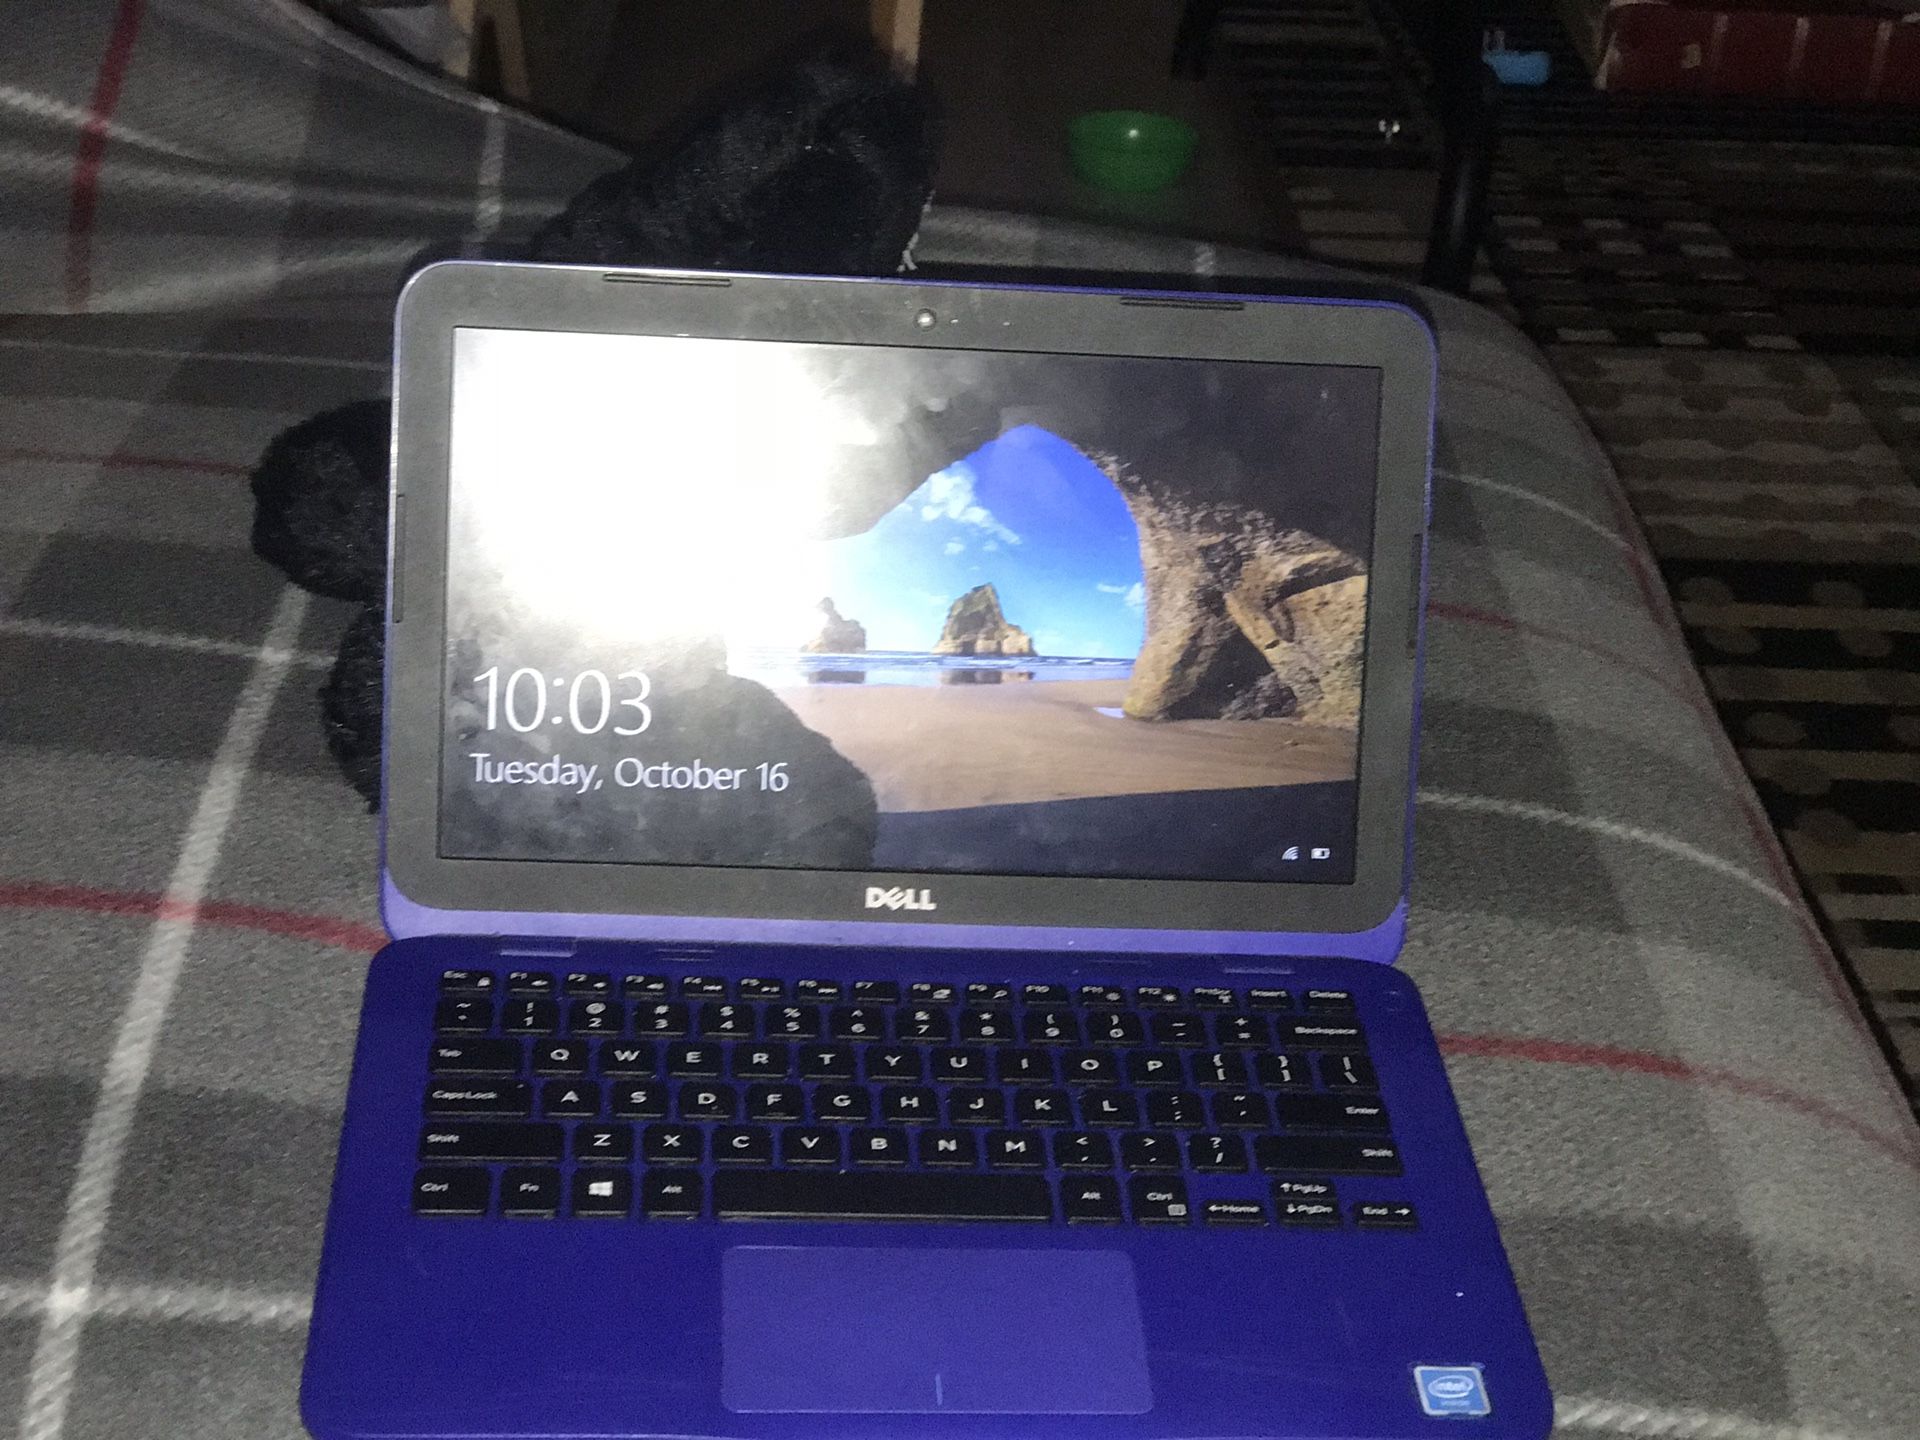 Blue Dell windows laptop